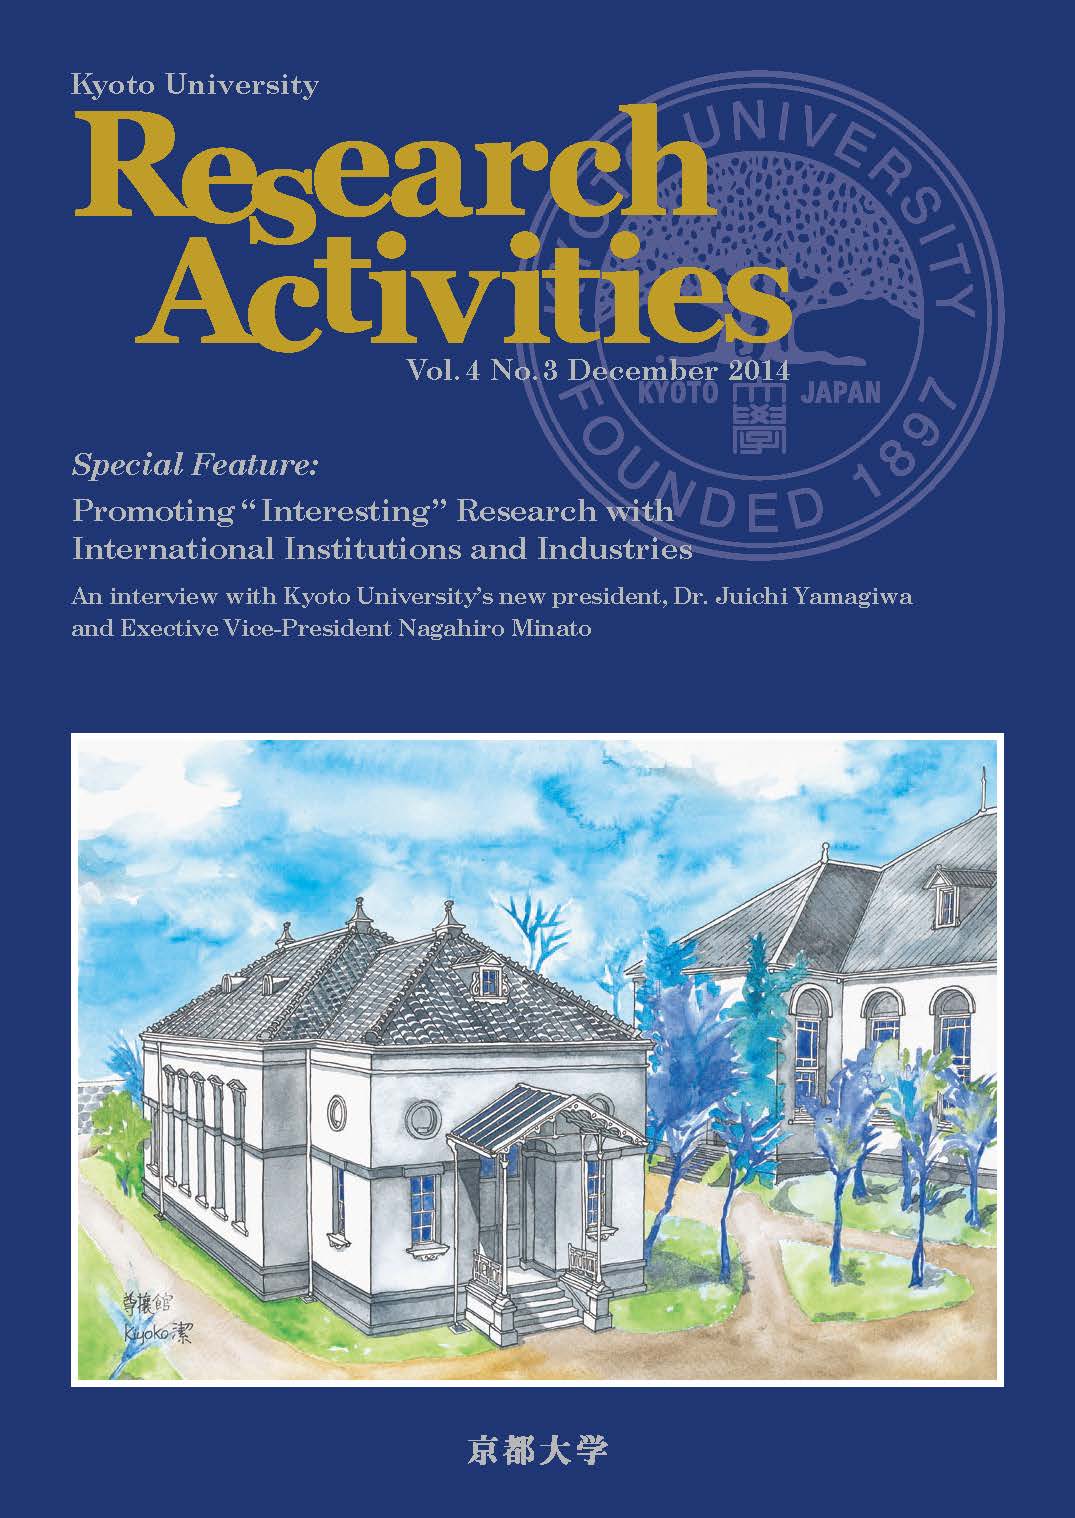 Kyoto University Research Activities Vol.4 No.3 December 2014